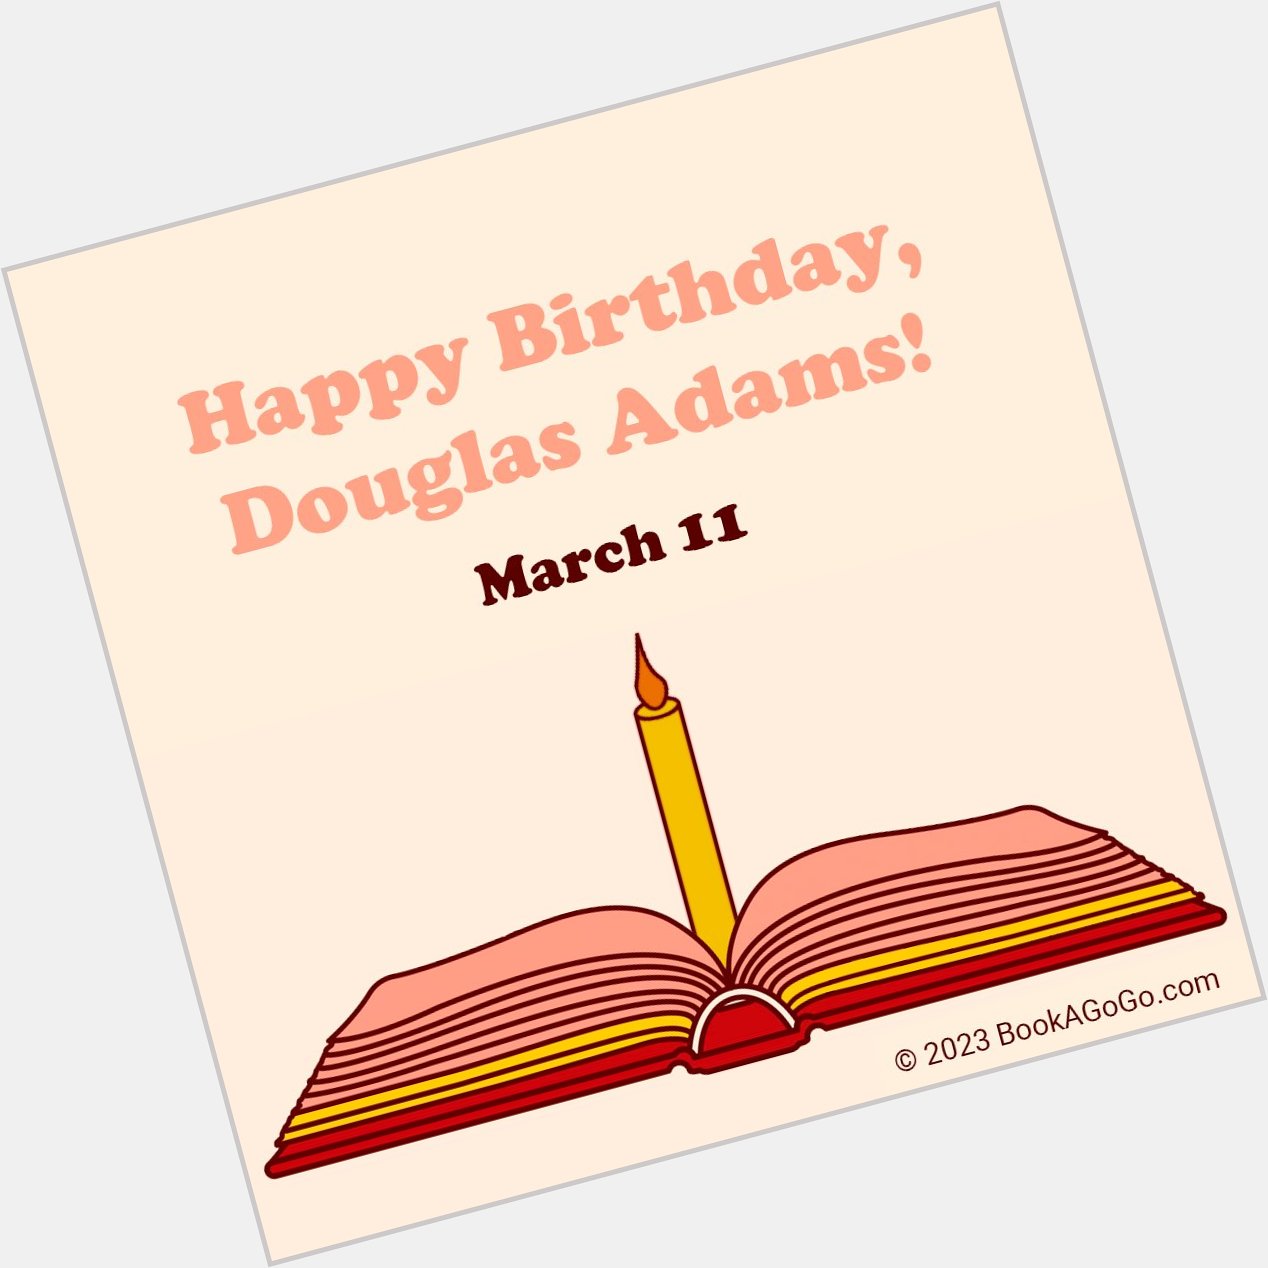 Happy birthday, Douglas Adams!  